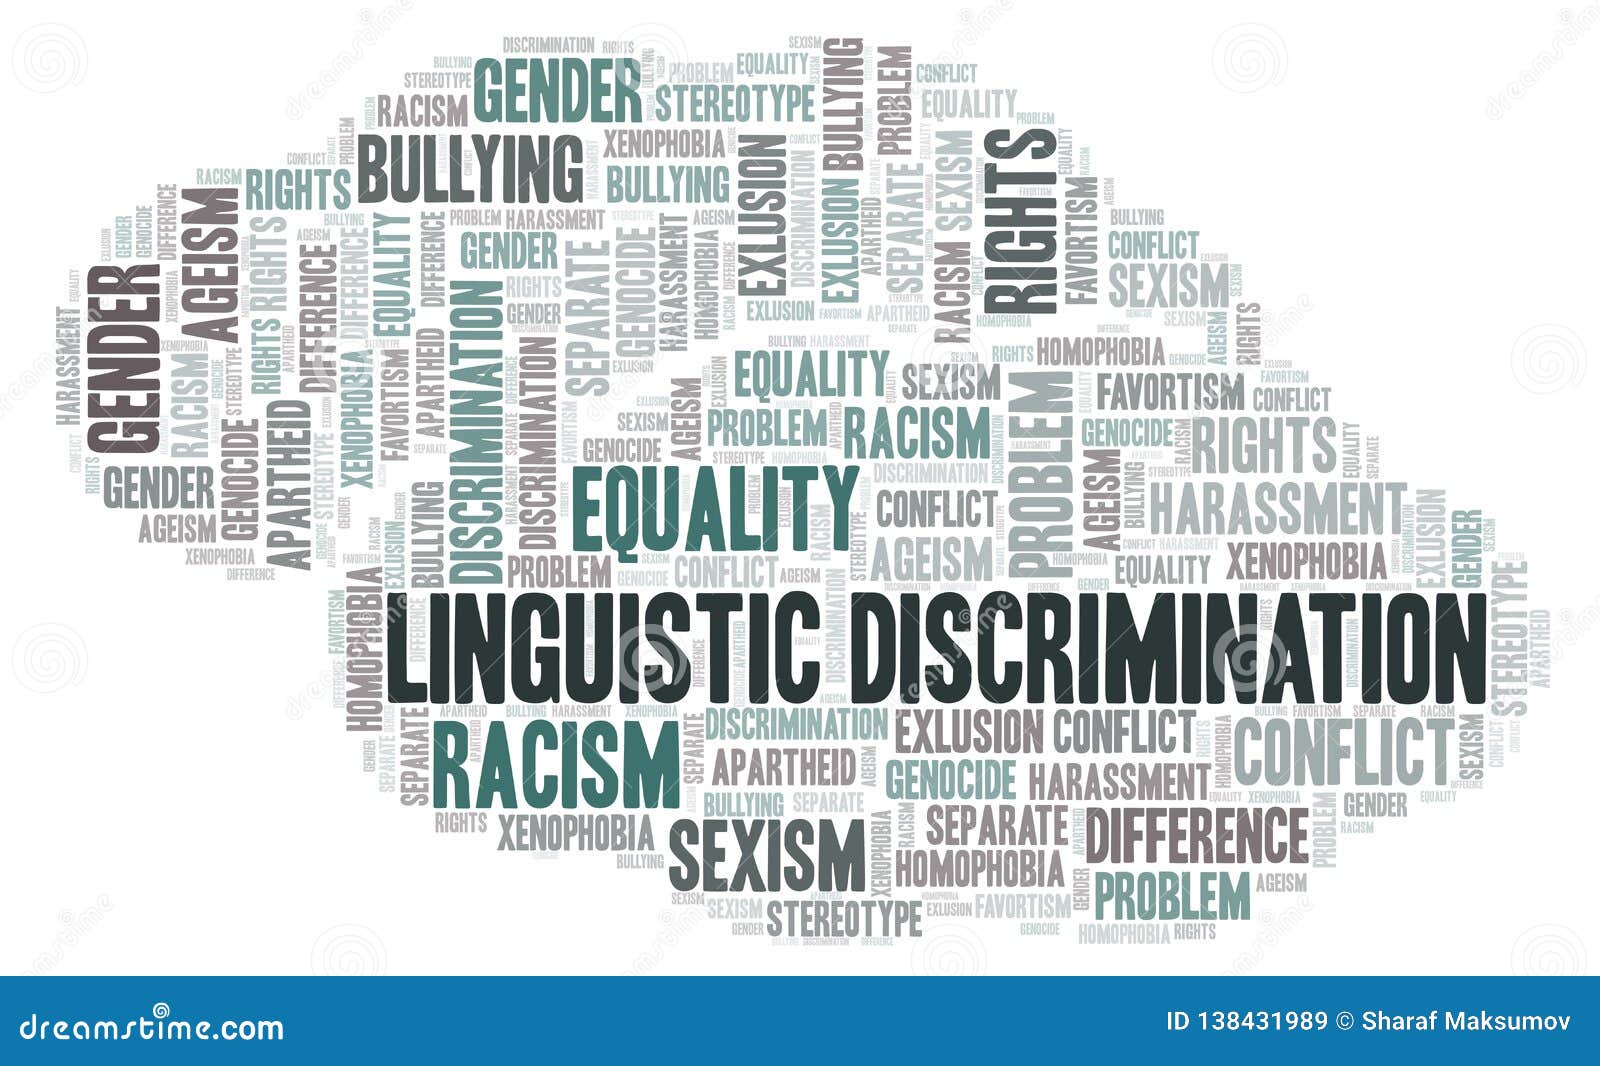 linguistic discrimination - type of discrimination - word cloud